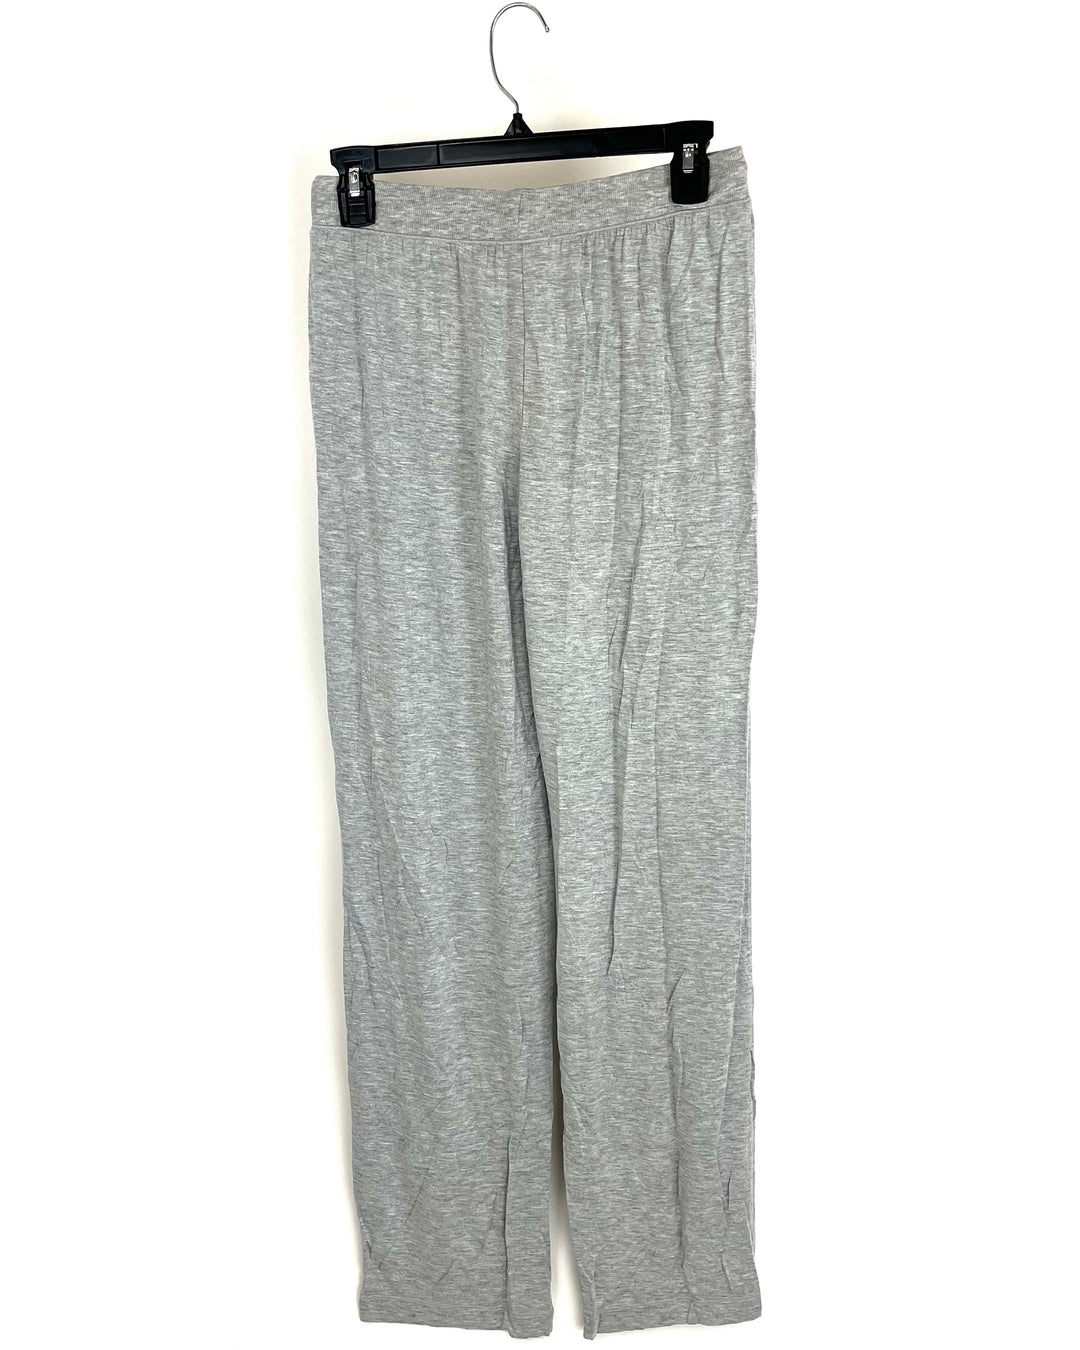 Heathered Grey Lounge Pants - Small